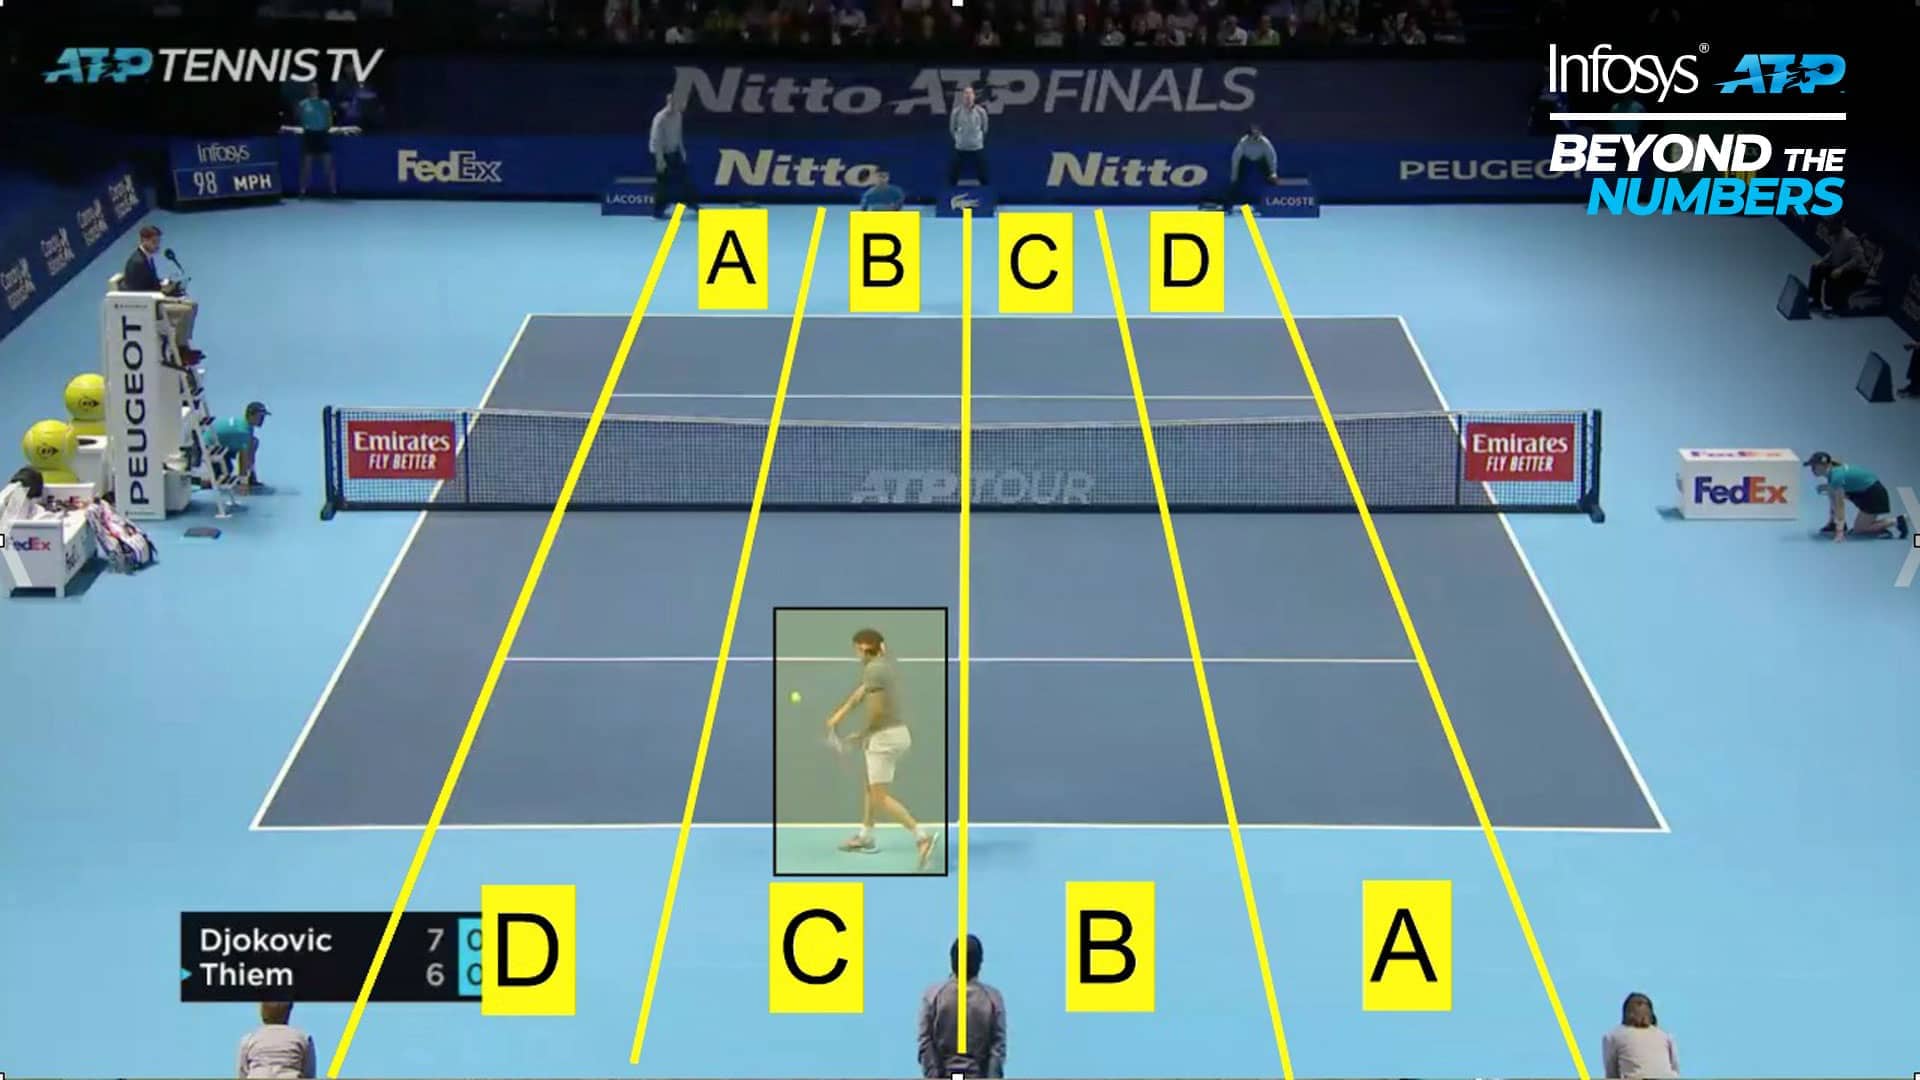 Infosys ATP Beyond The Numbers How Dominic Thiem, Novak Djokovic and Co